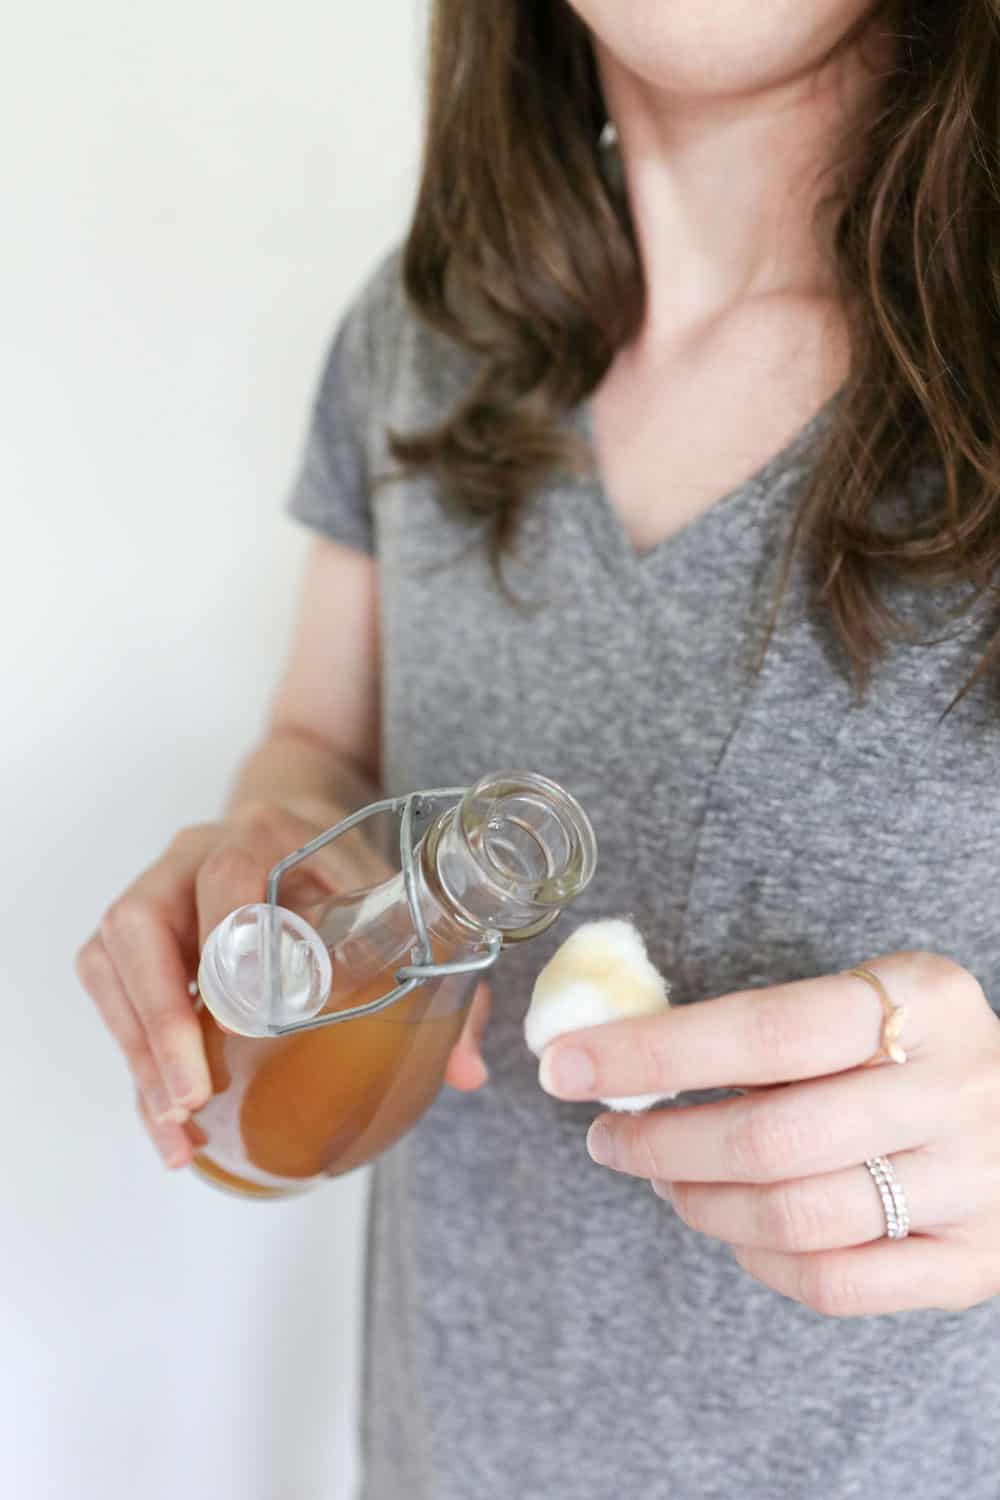 6 Ways to Use Apple Cider Vinegar for Acne